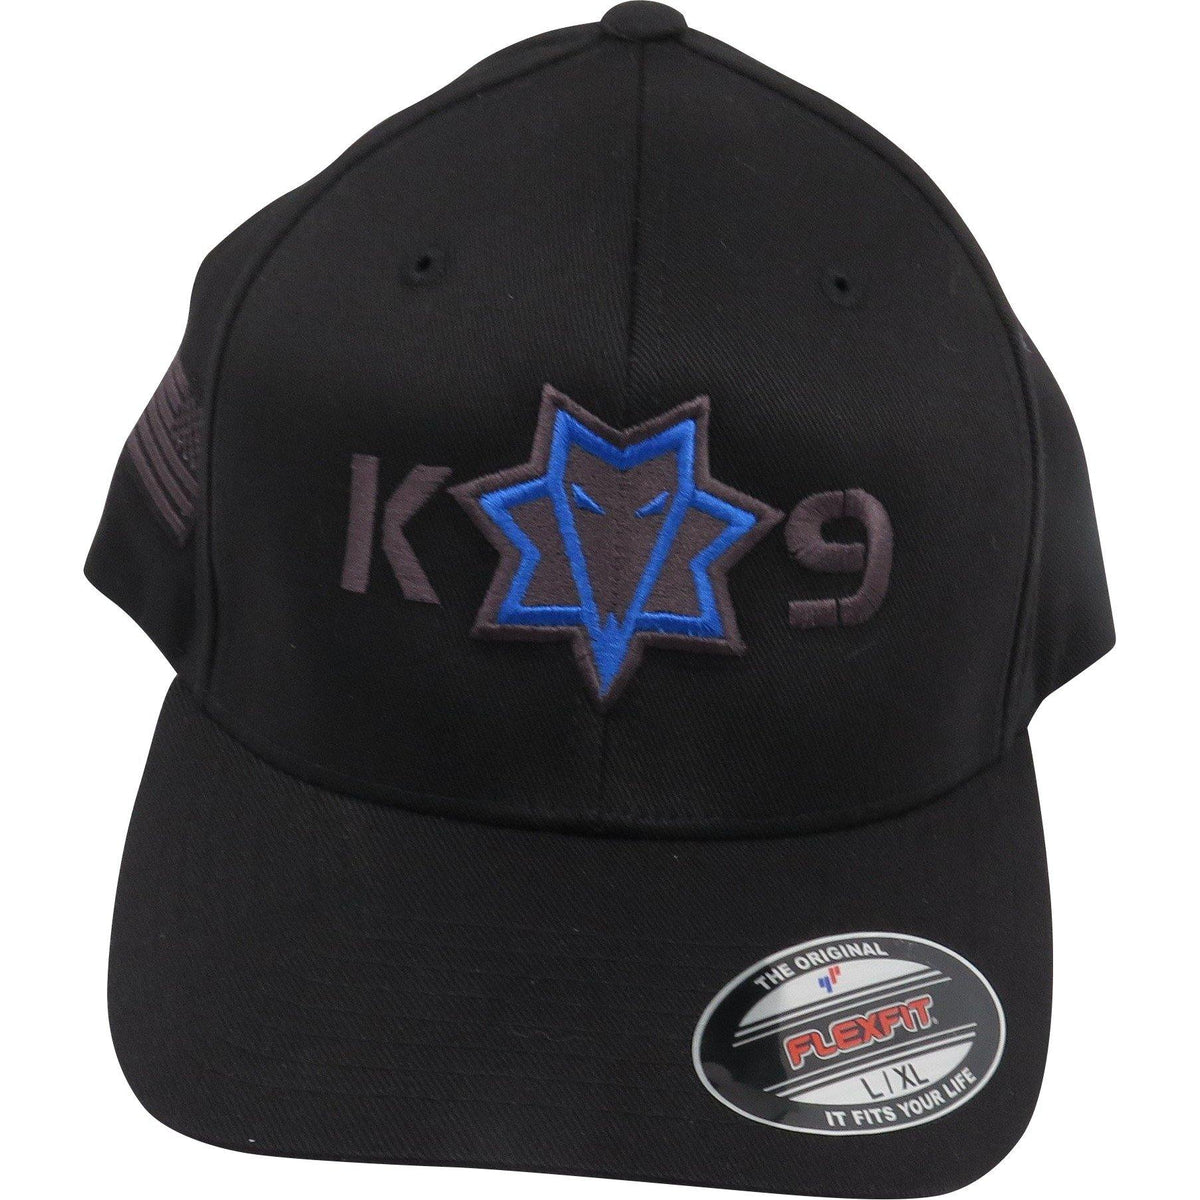 K9 Tactical Gear Flex-Fit Hat